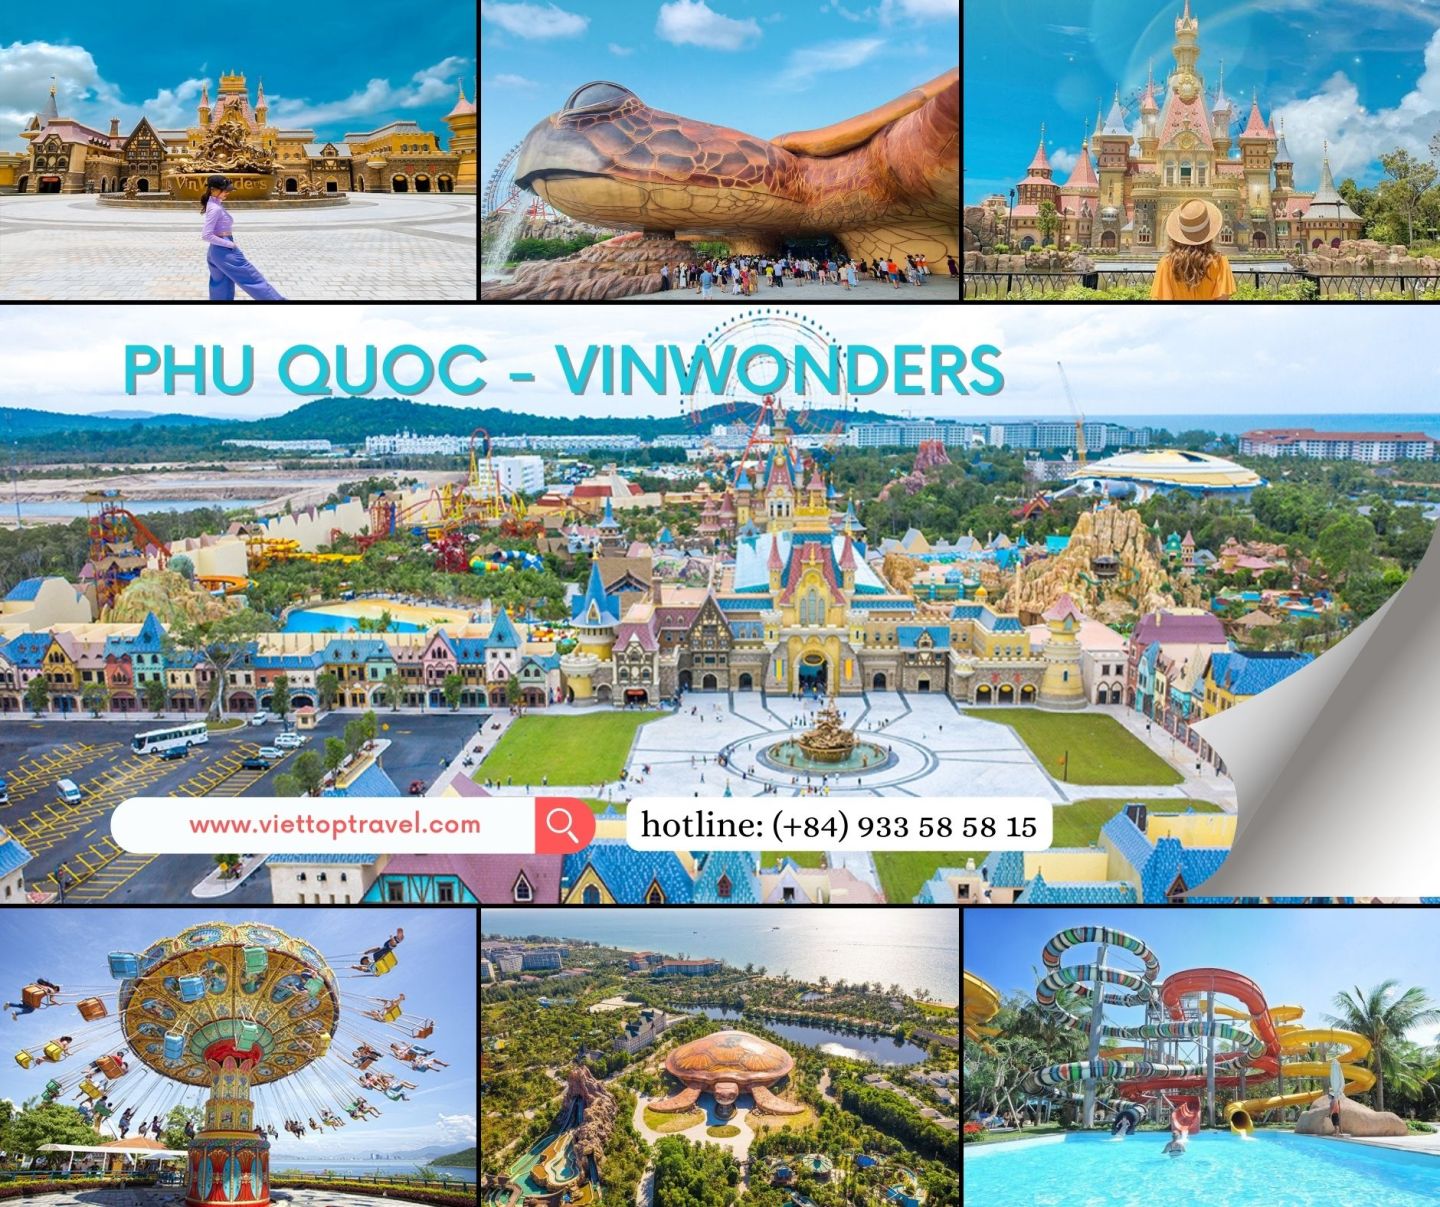 VinWonders Phu Quoc the largest theme parks in Vietnam